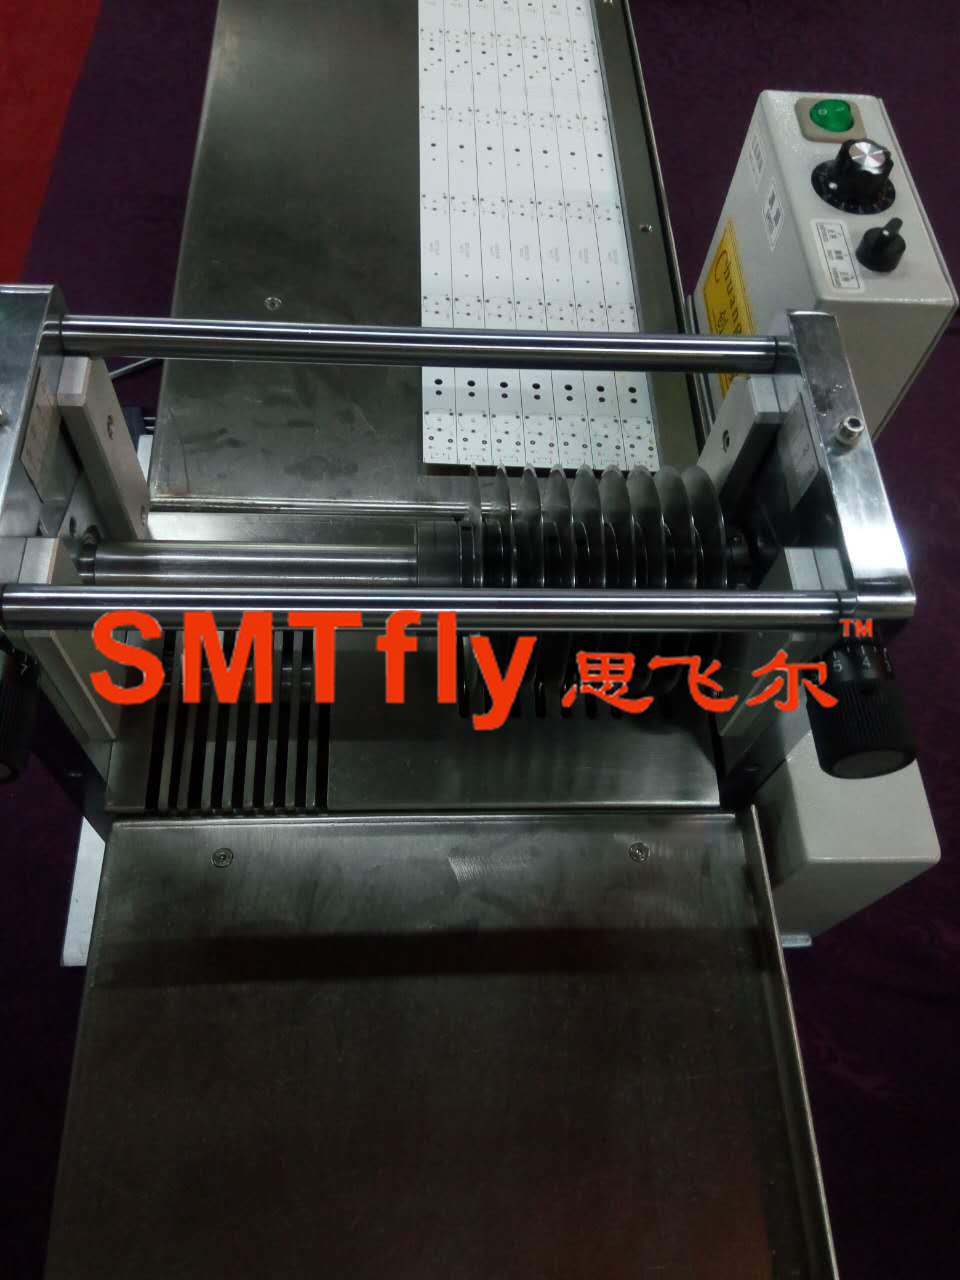 Multitool PCB Cutting Machine,SMTfly-1SN